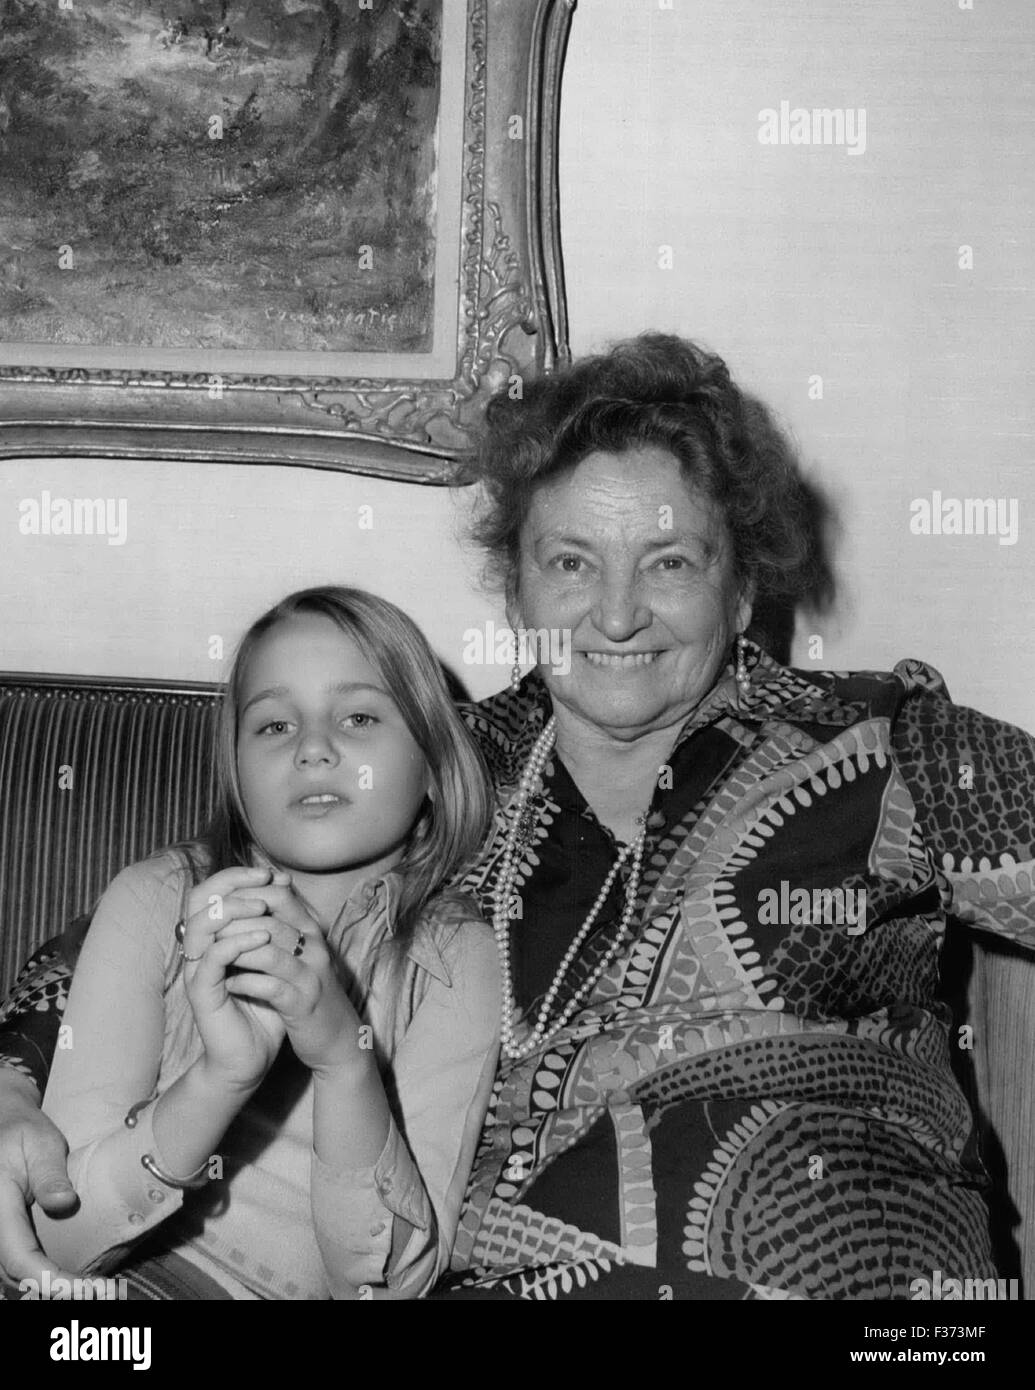 Dec. 29, 1974 - Marine Schell's mother Margarethe Schell - Von Noe & granddaughter Marie - Therese ( 10 1/2 ) Essex House New york. © Keystone Pictures USA/ZUMAPRESS.com/Alamy Live News Stock Photo